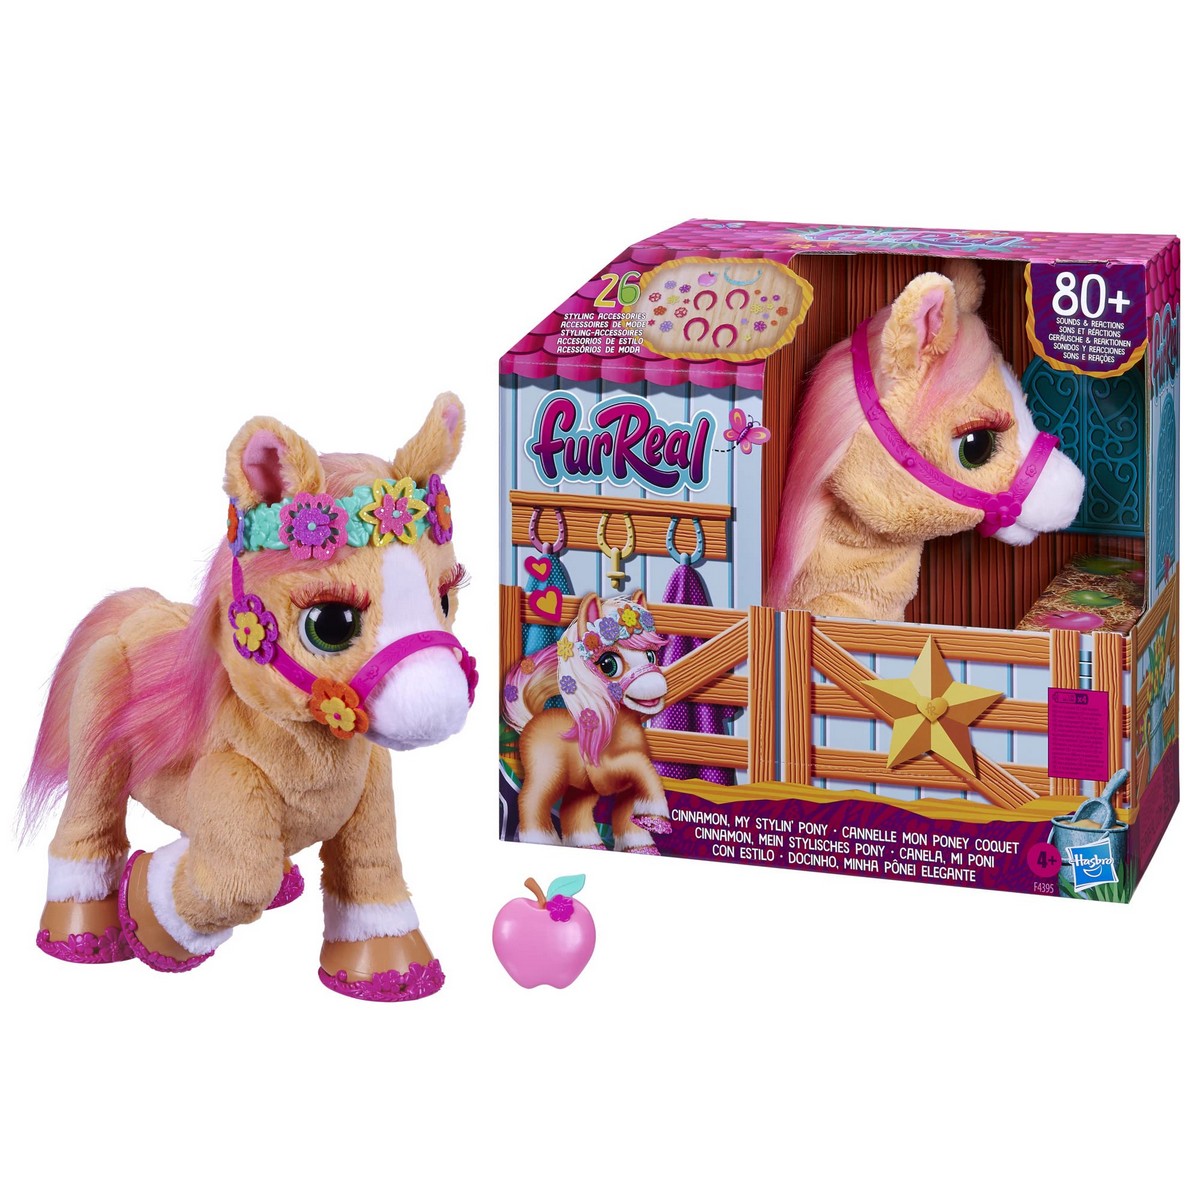 Animale Interattivo Hasbro Cinnamon, My Stylin' Pony